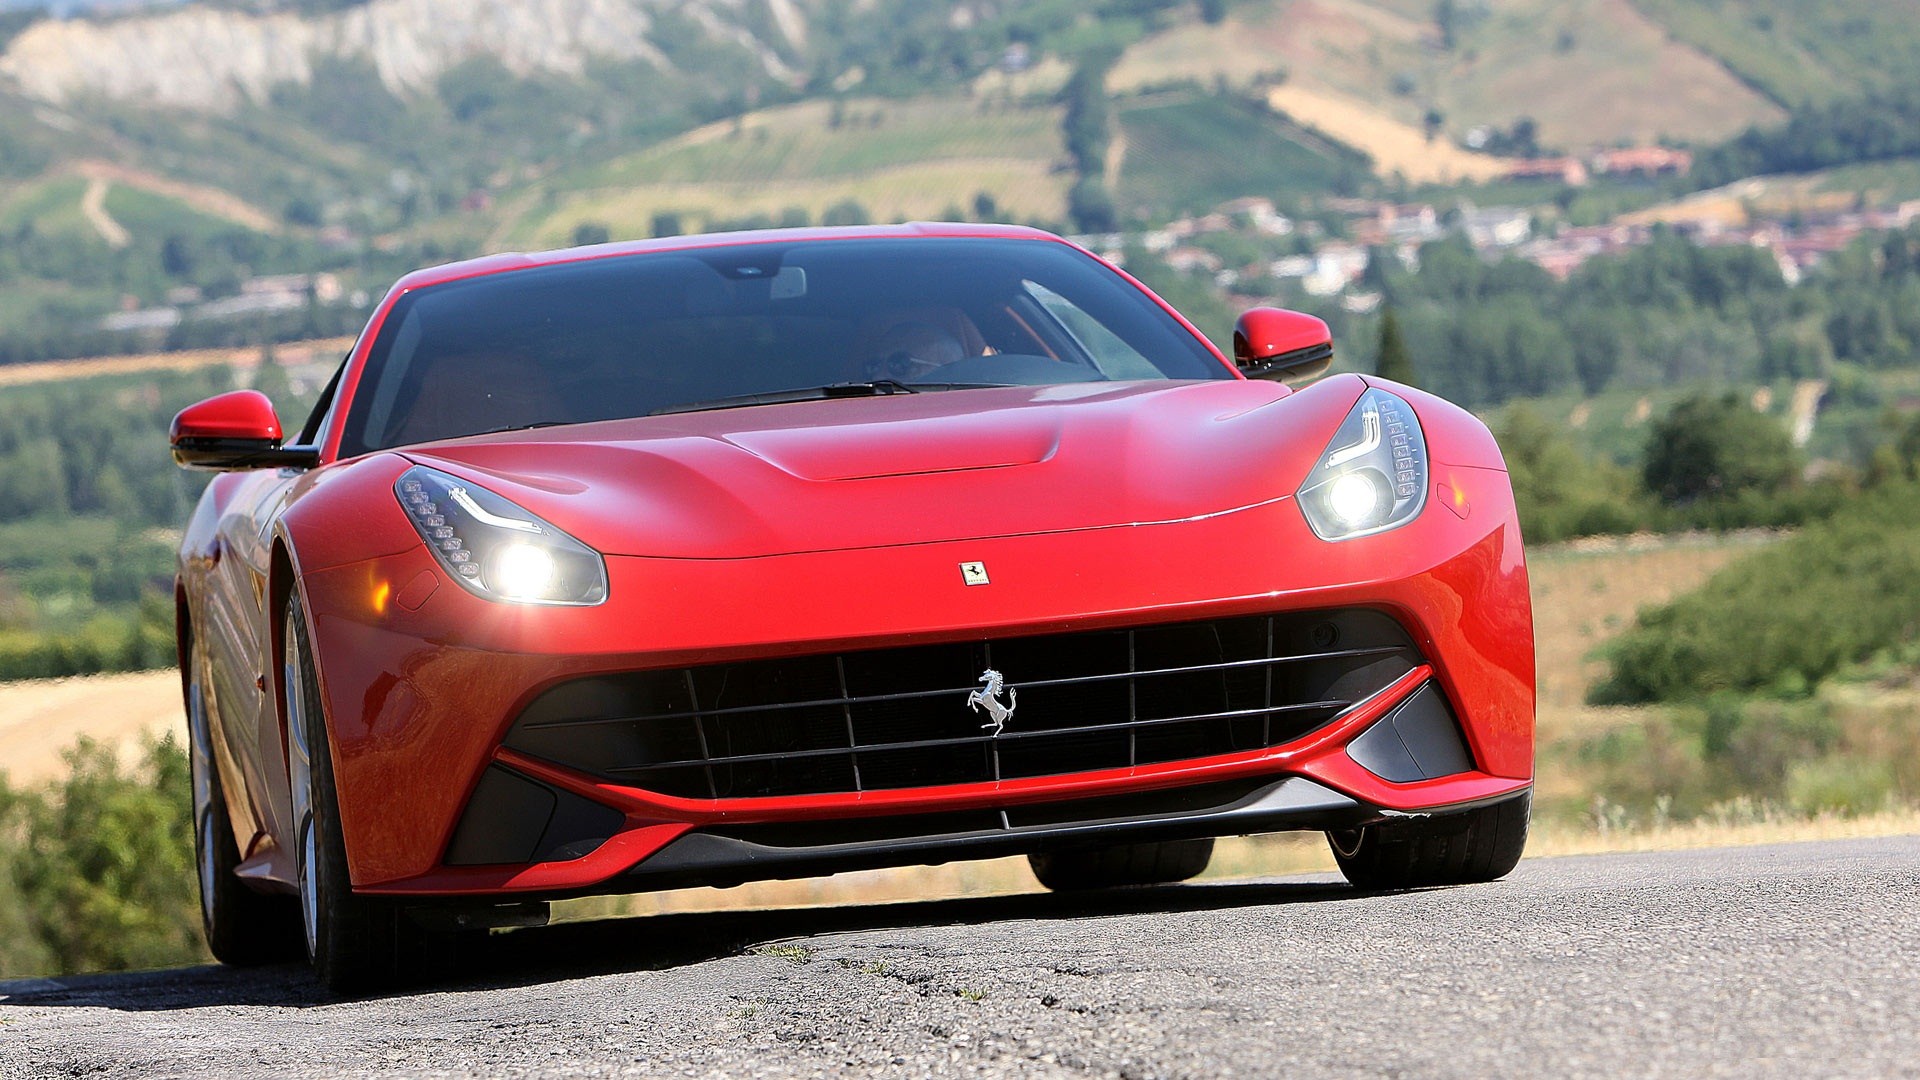 Descarga gratuita de fondo de pantalla para móvil de Ferrari F12 Berlinetta, Ferrari, Vehículos.